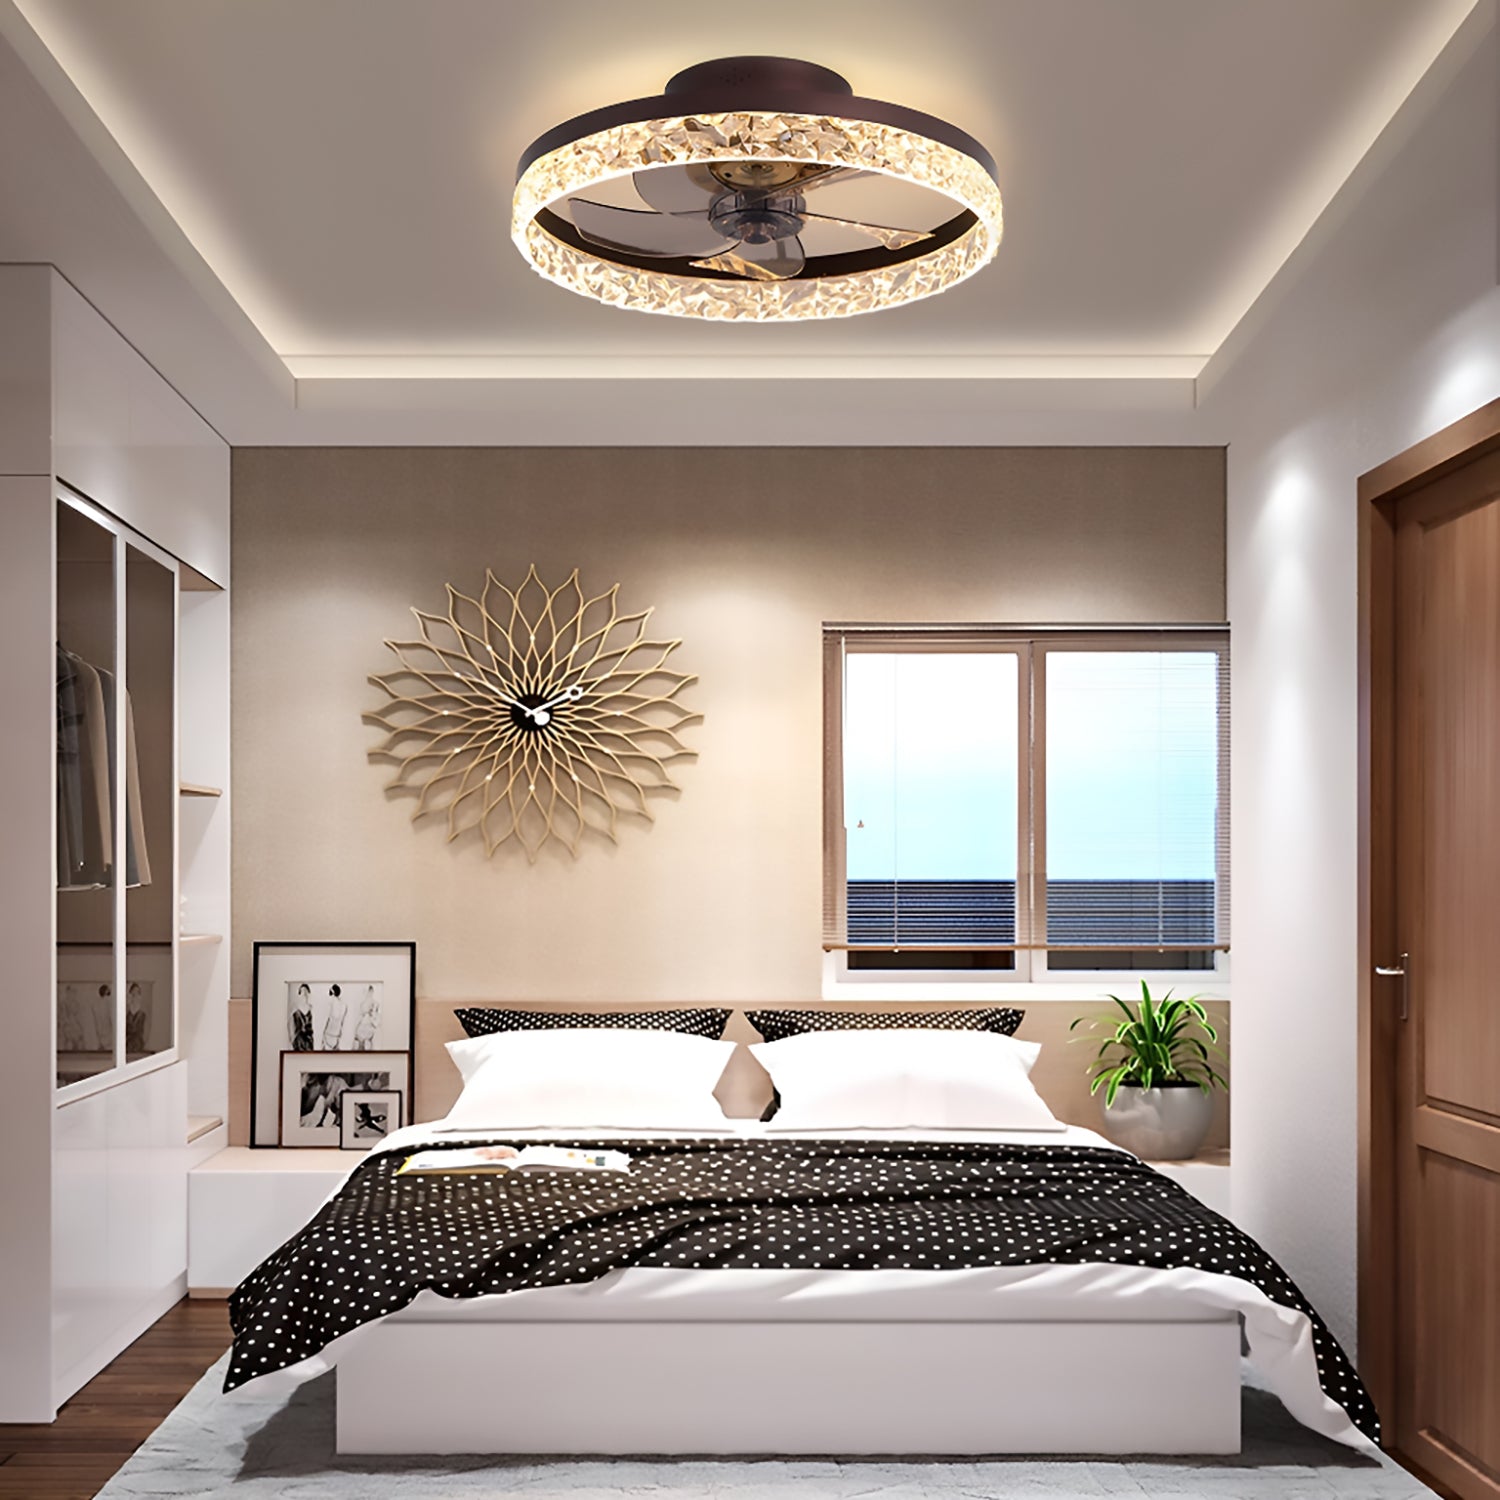 Circular CeilingFan Light Modern And Simple Creative Embedded Integrated bedroom black|Sofary